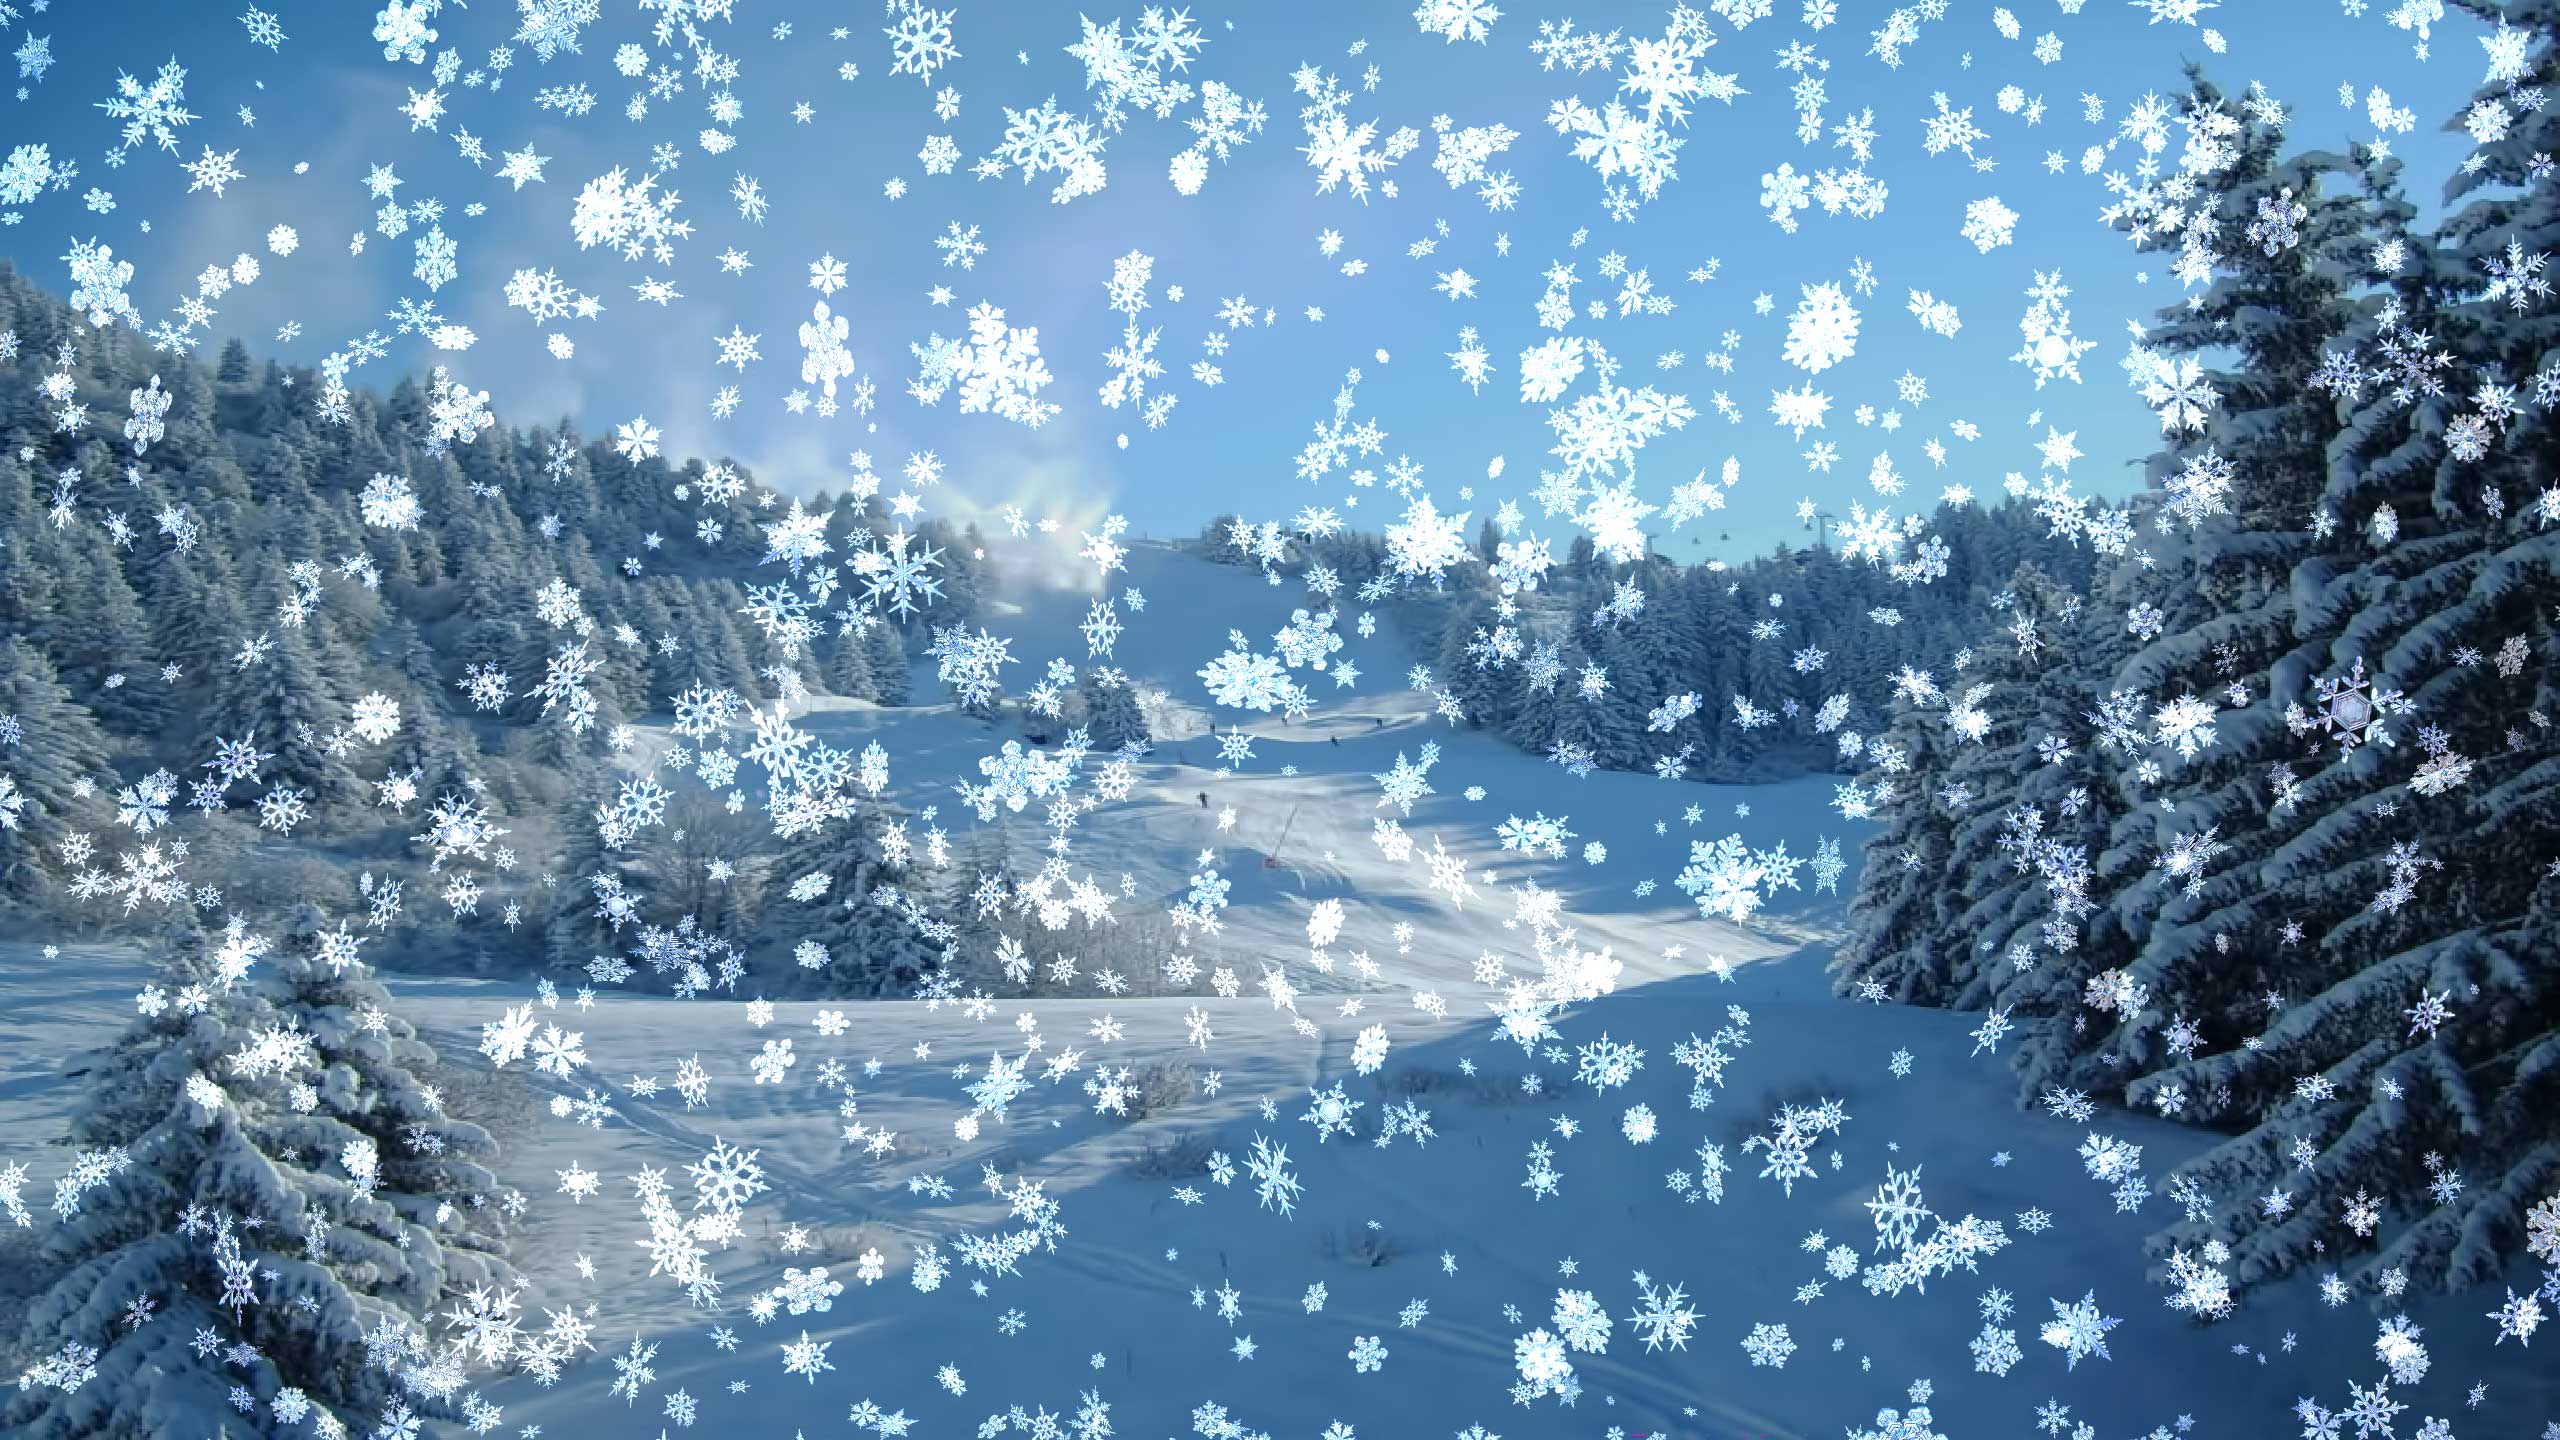 Snowy Desktop 3d Screensaver - Animated Snow Falling - HD Wallpaper 